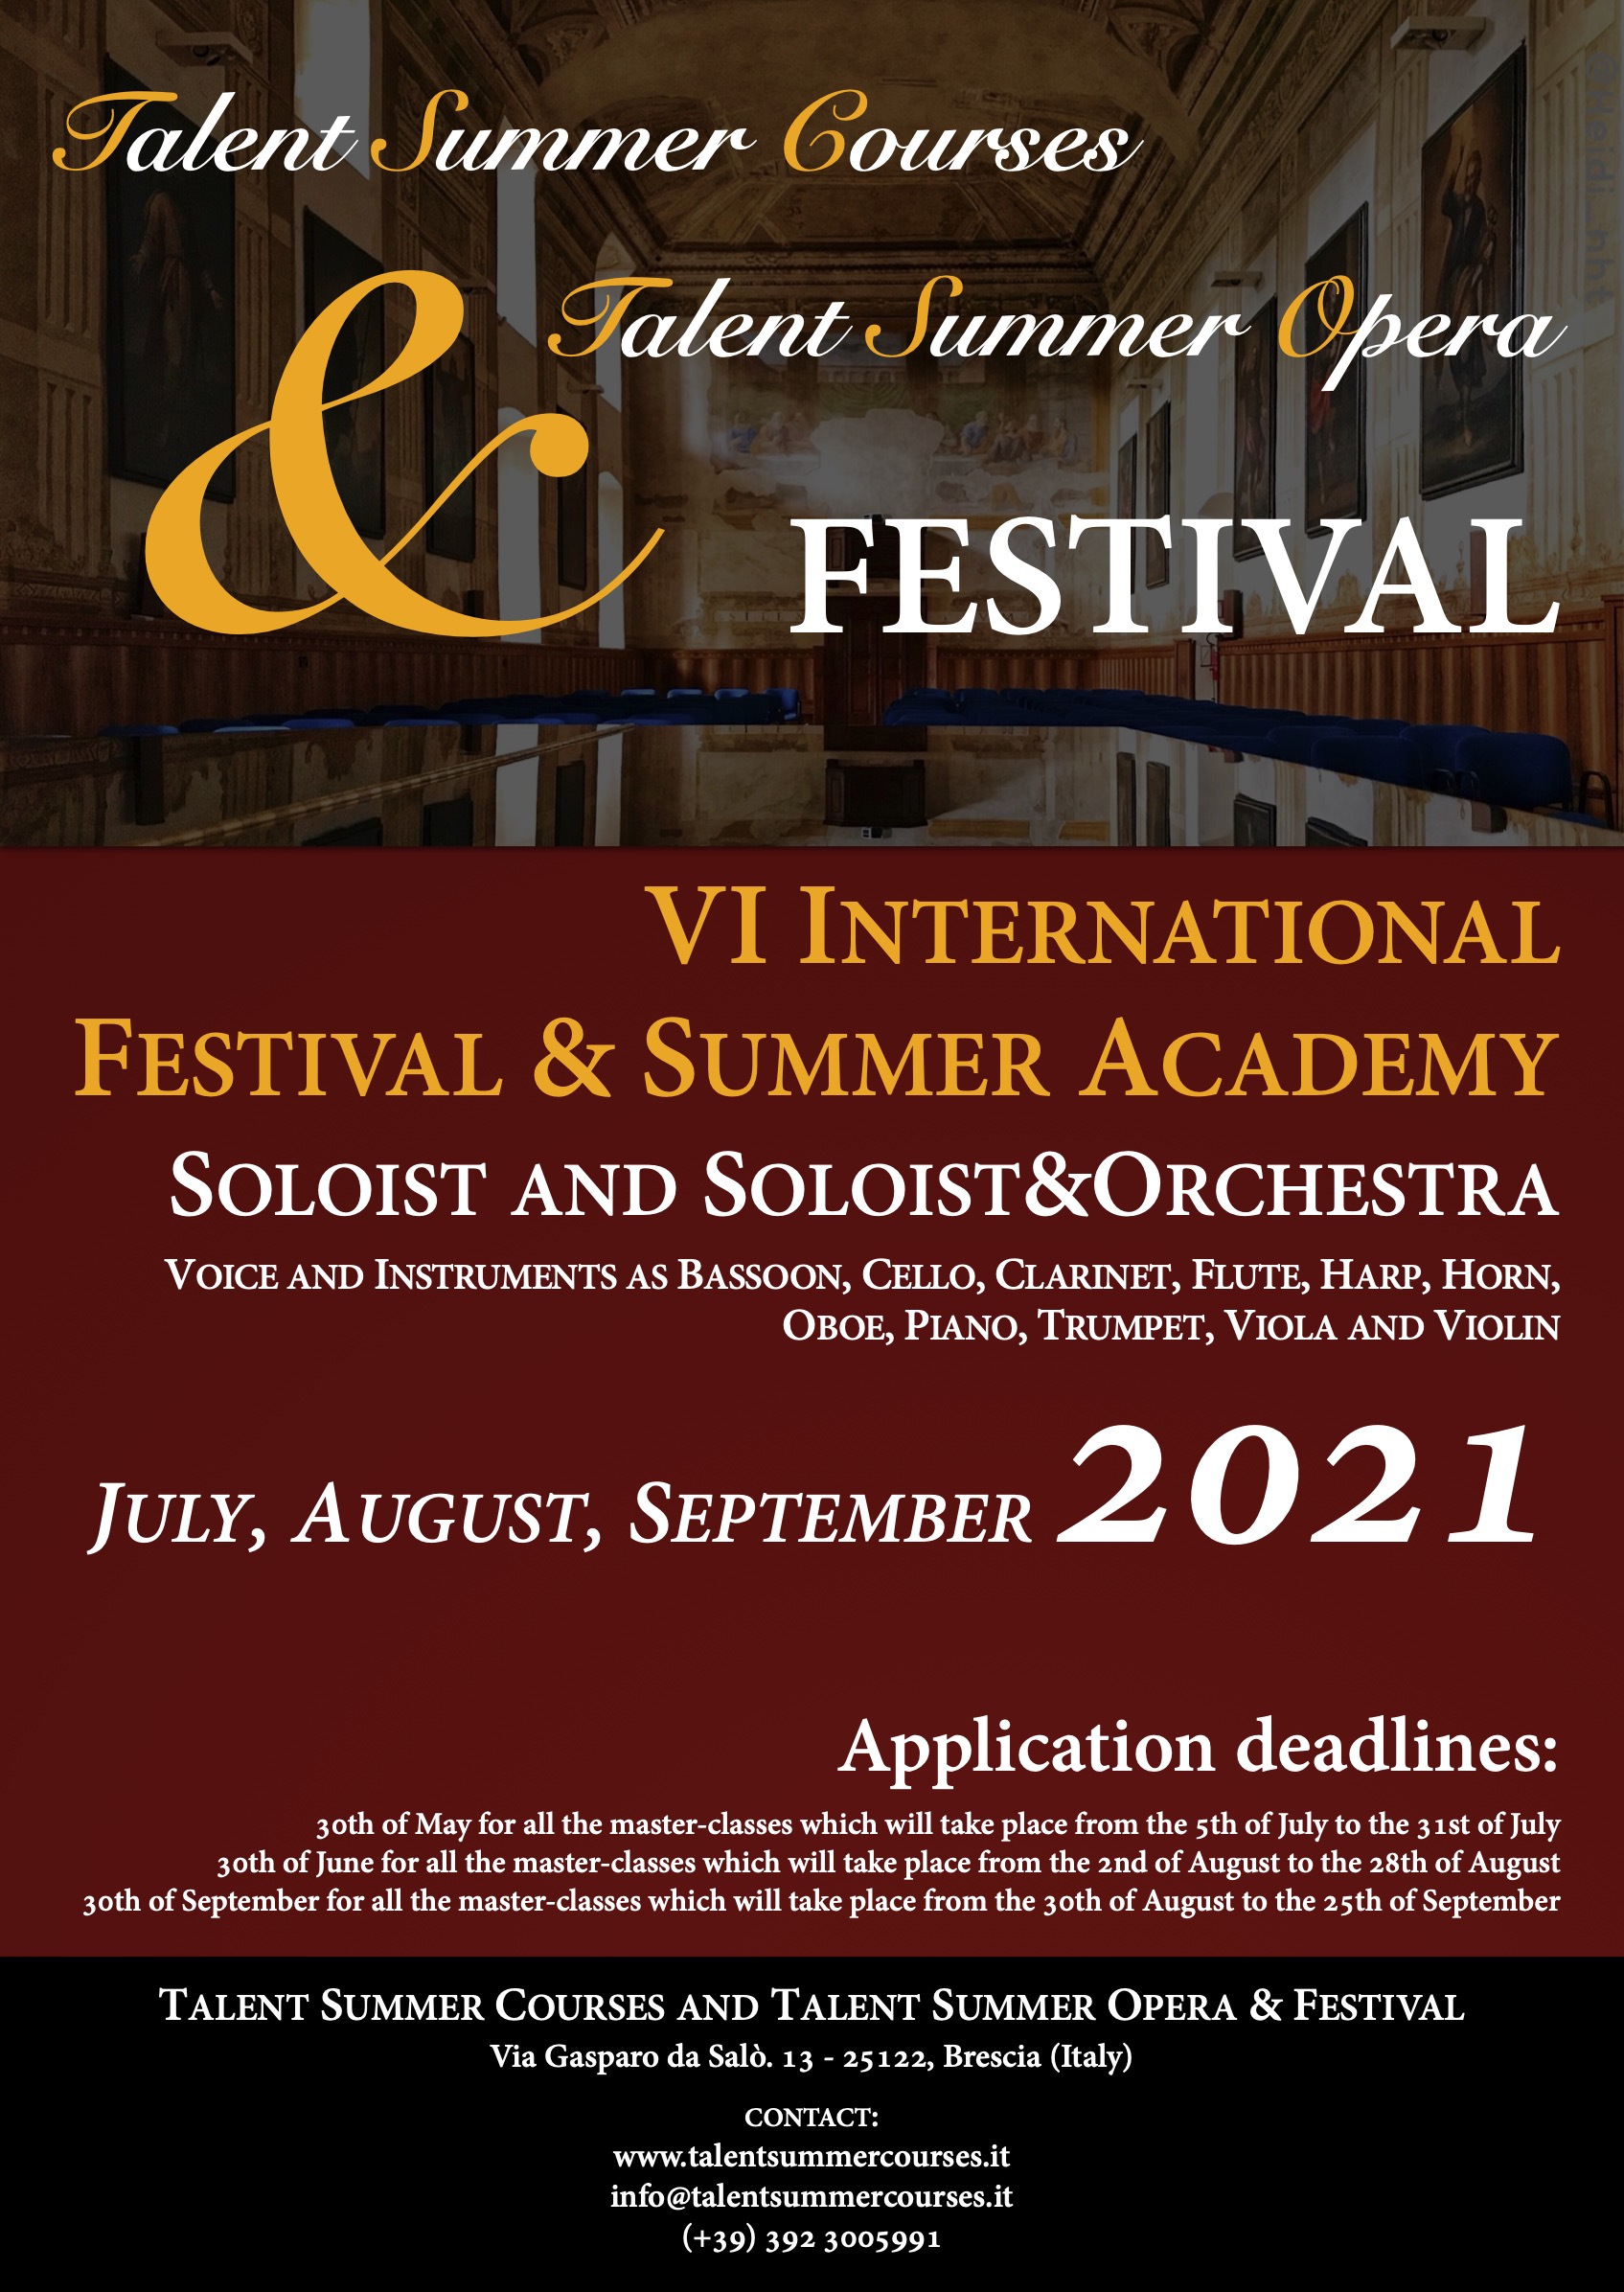 Talent Summer Courses and Talent Summer Opera & FESTIVAL